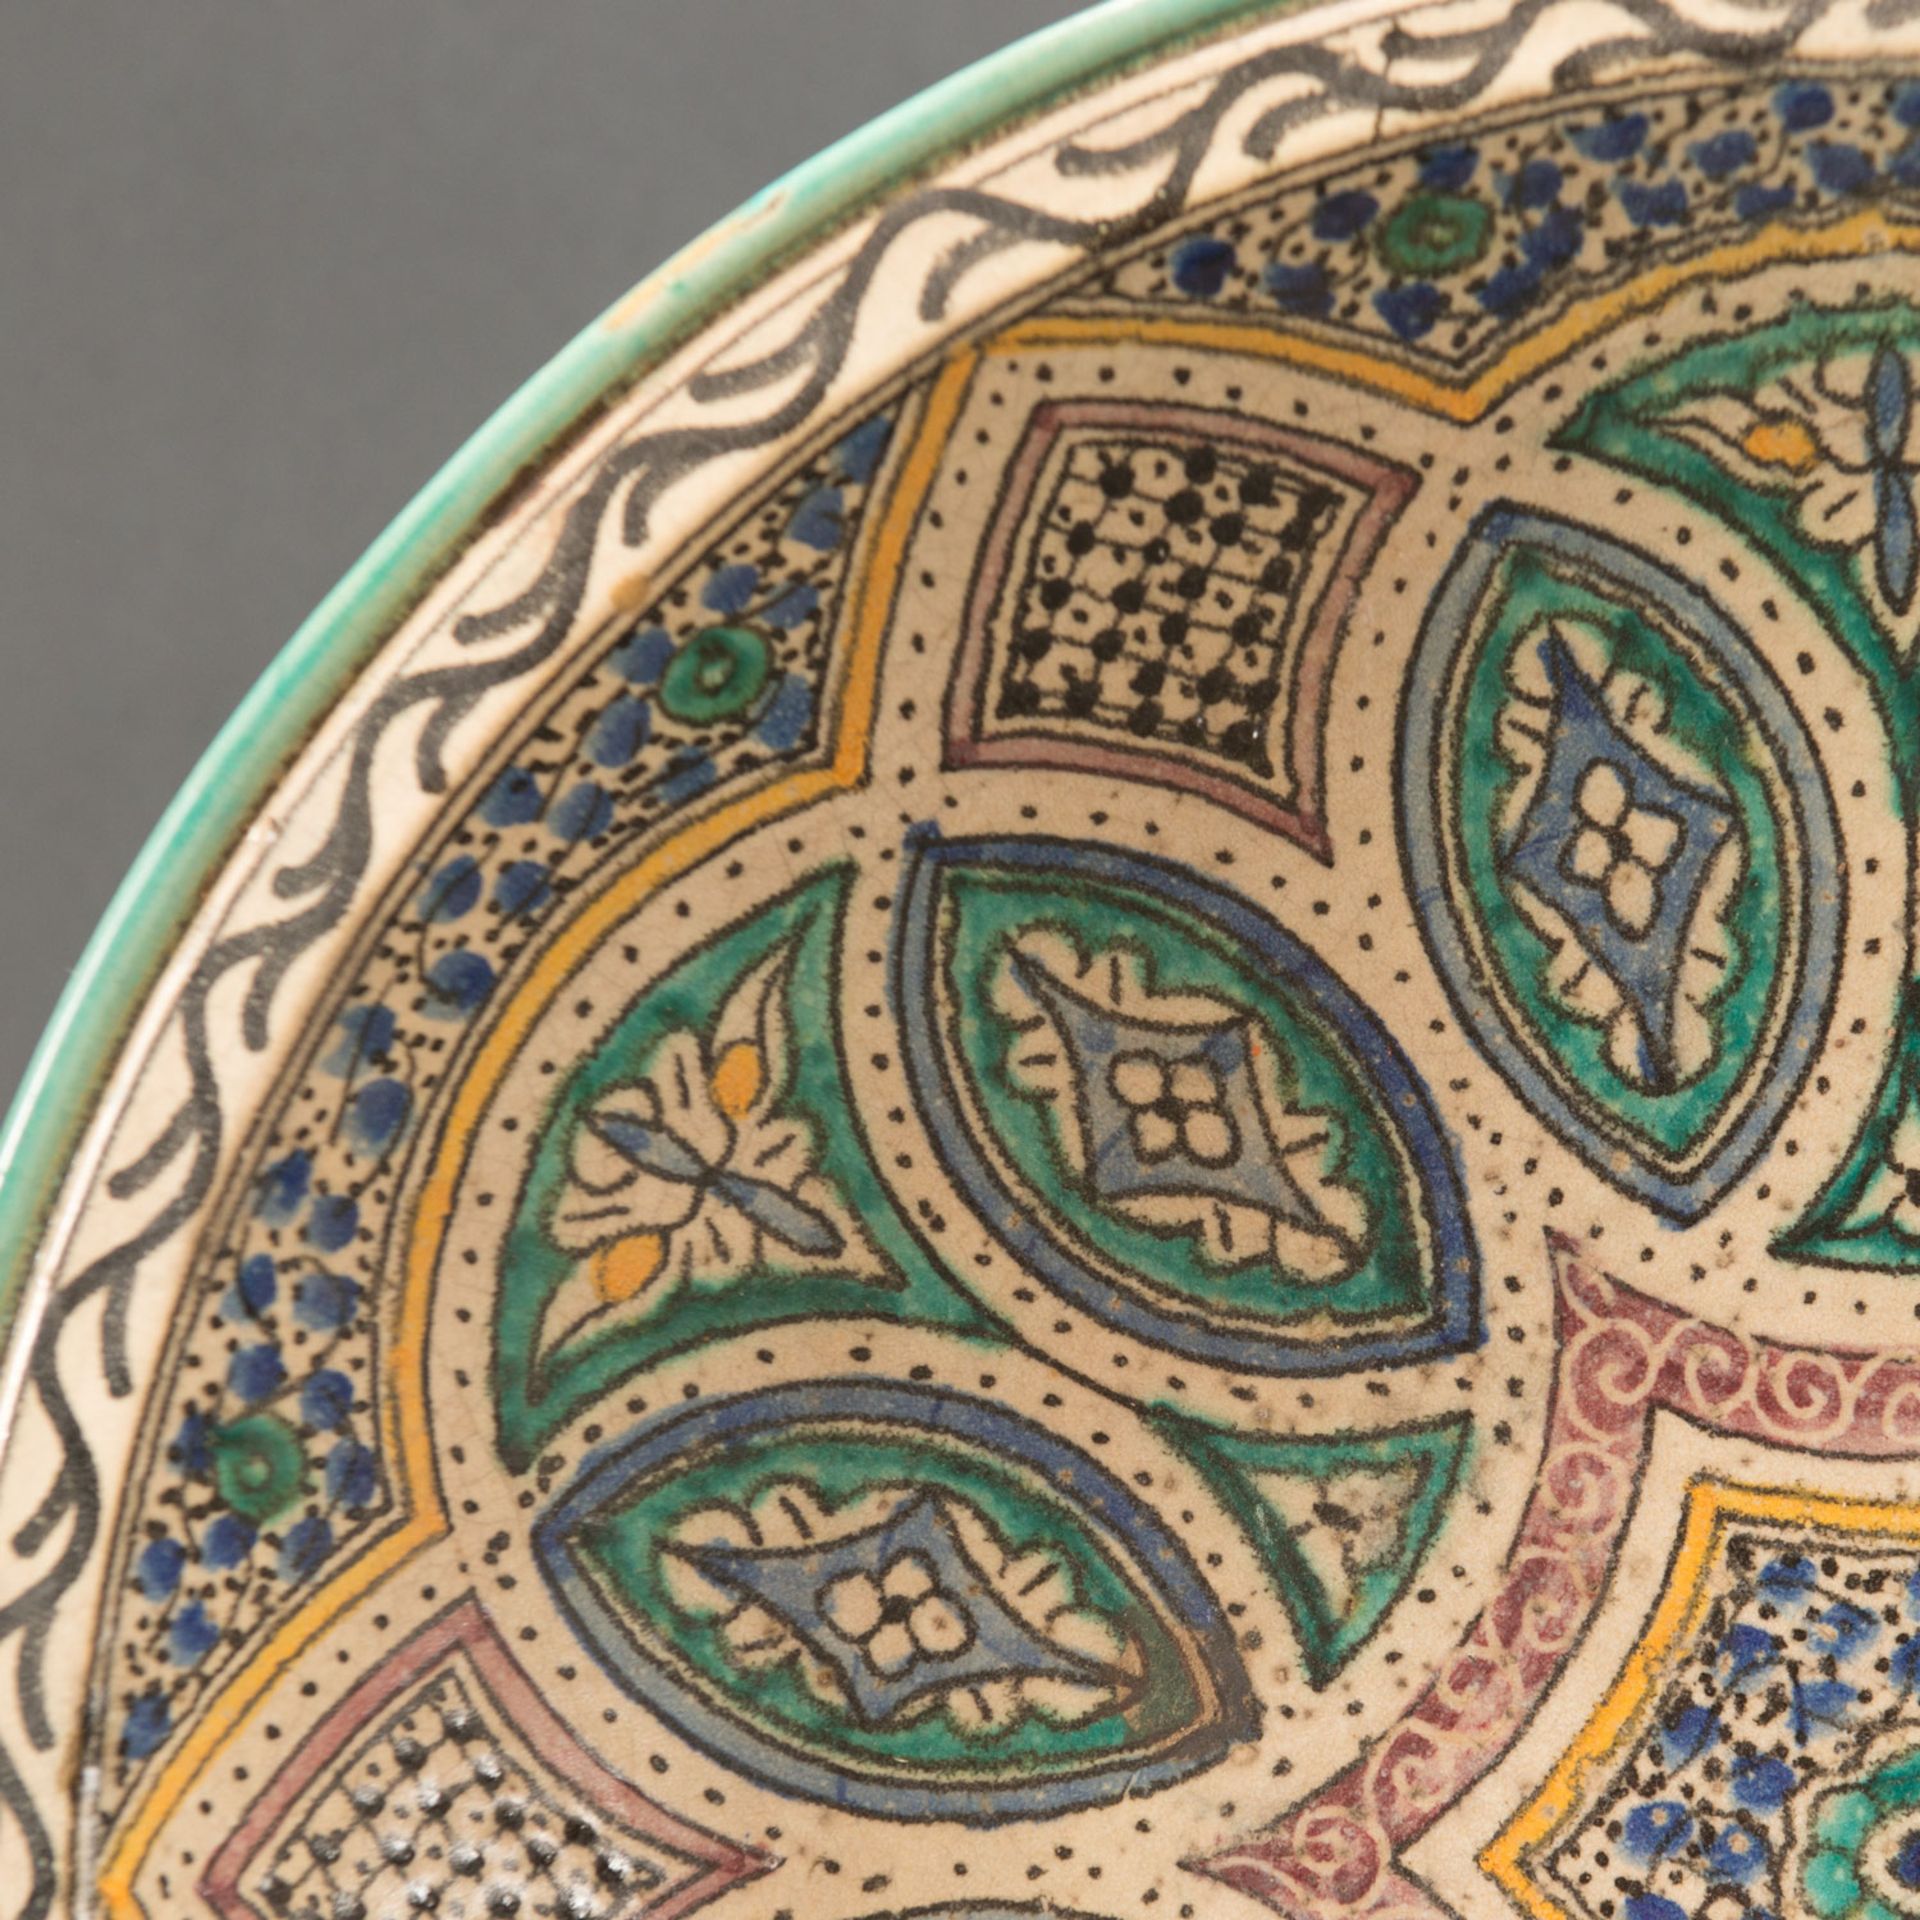 Fes Ceramic Plate - Image 2 of 3